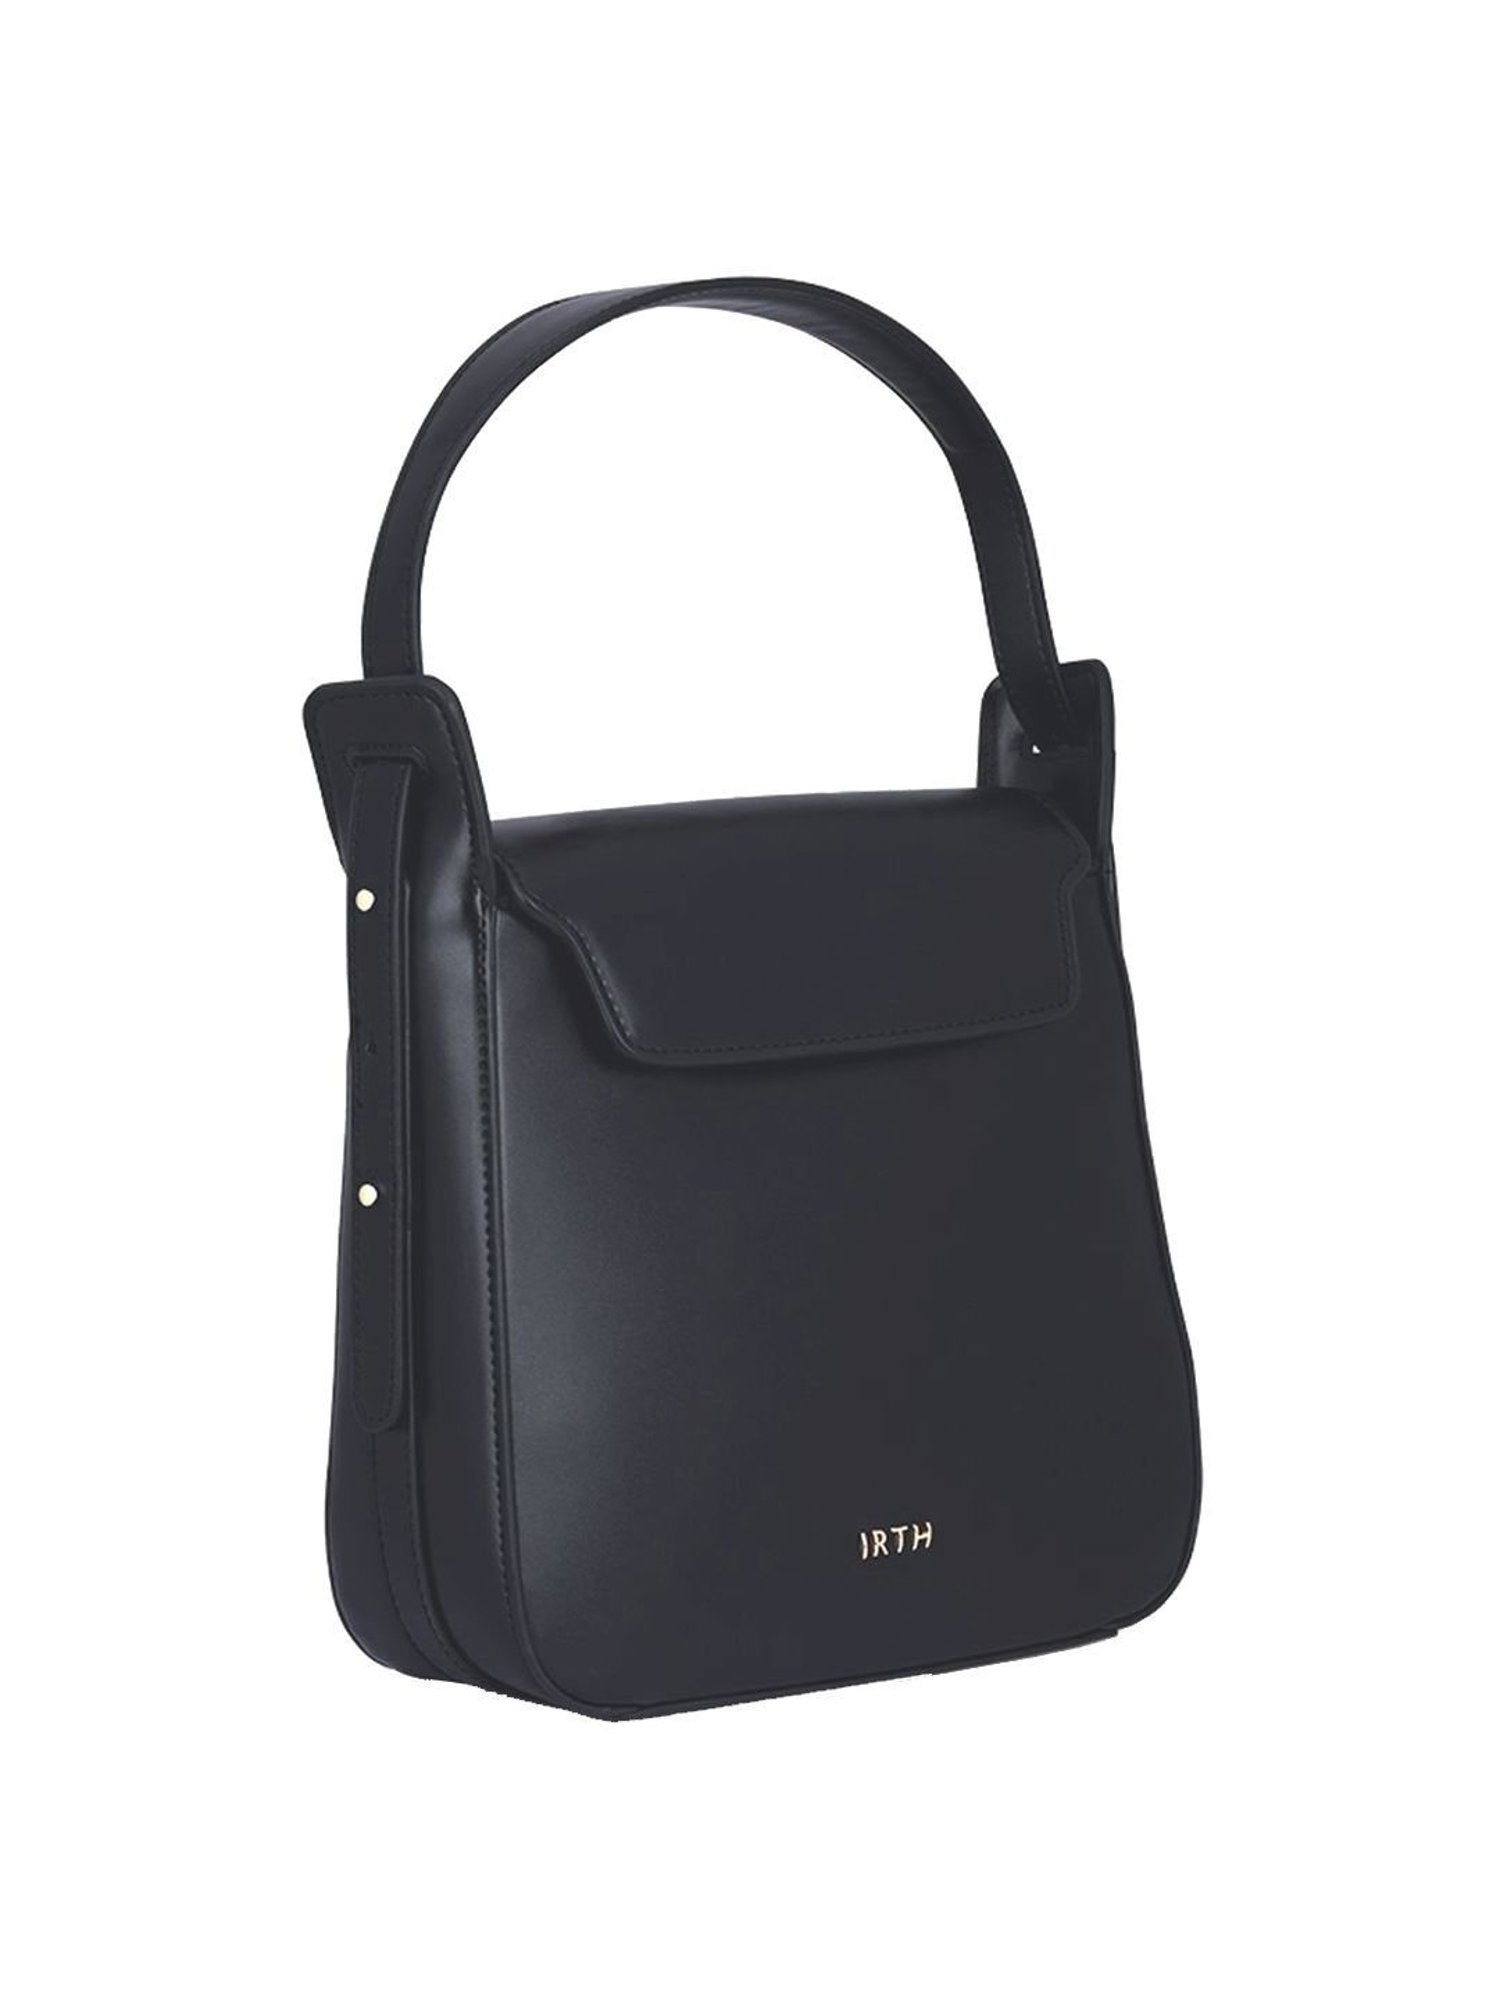 Buy IRTH White Solid Medium Tote Handbag Online At Best Price @ Tata CLiQ